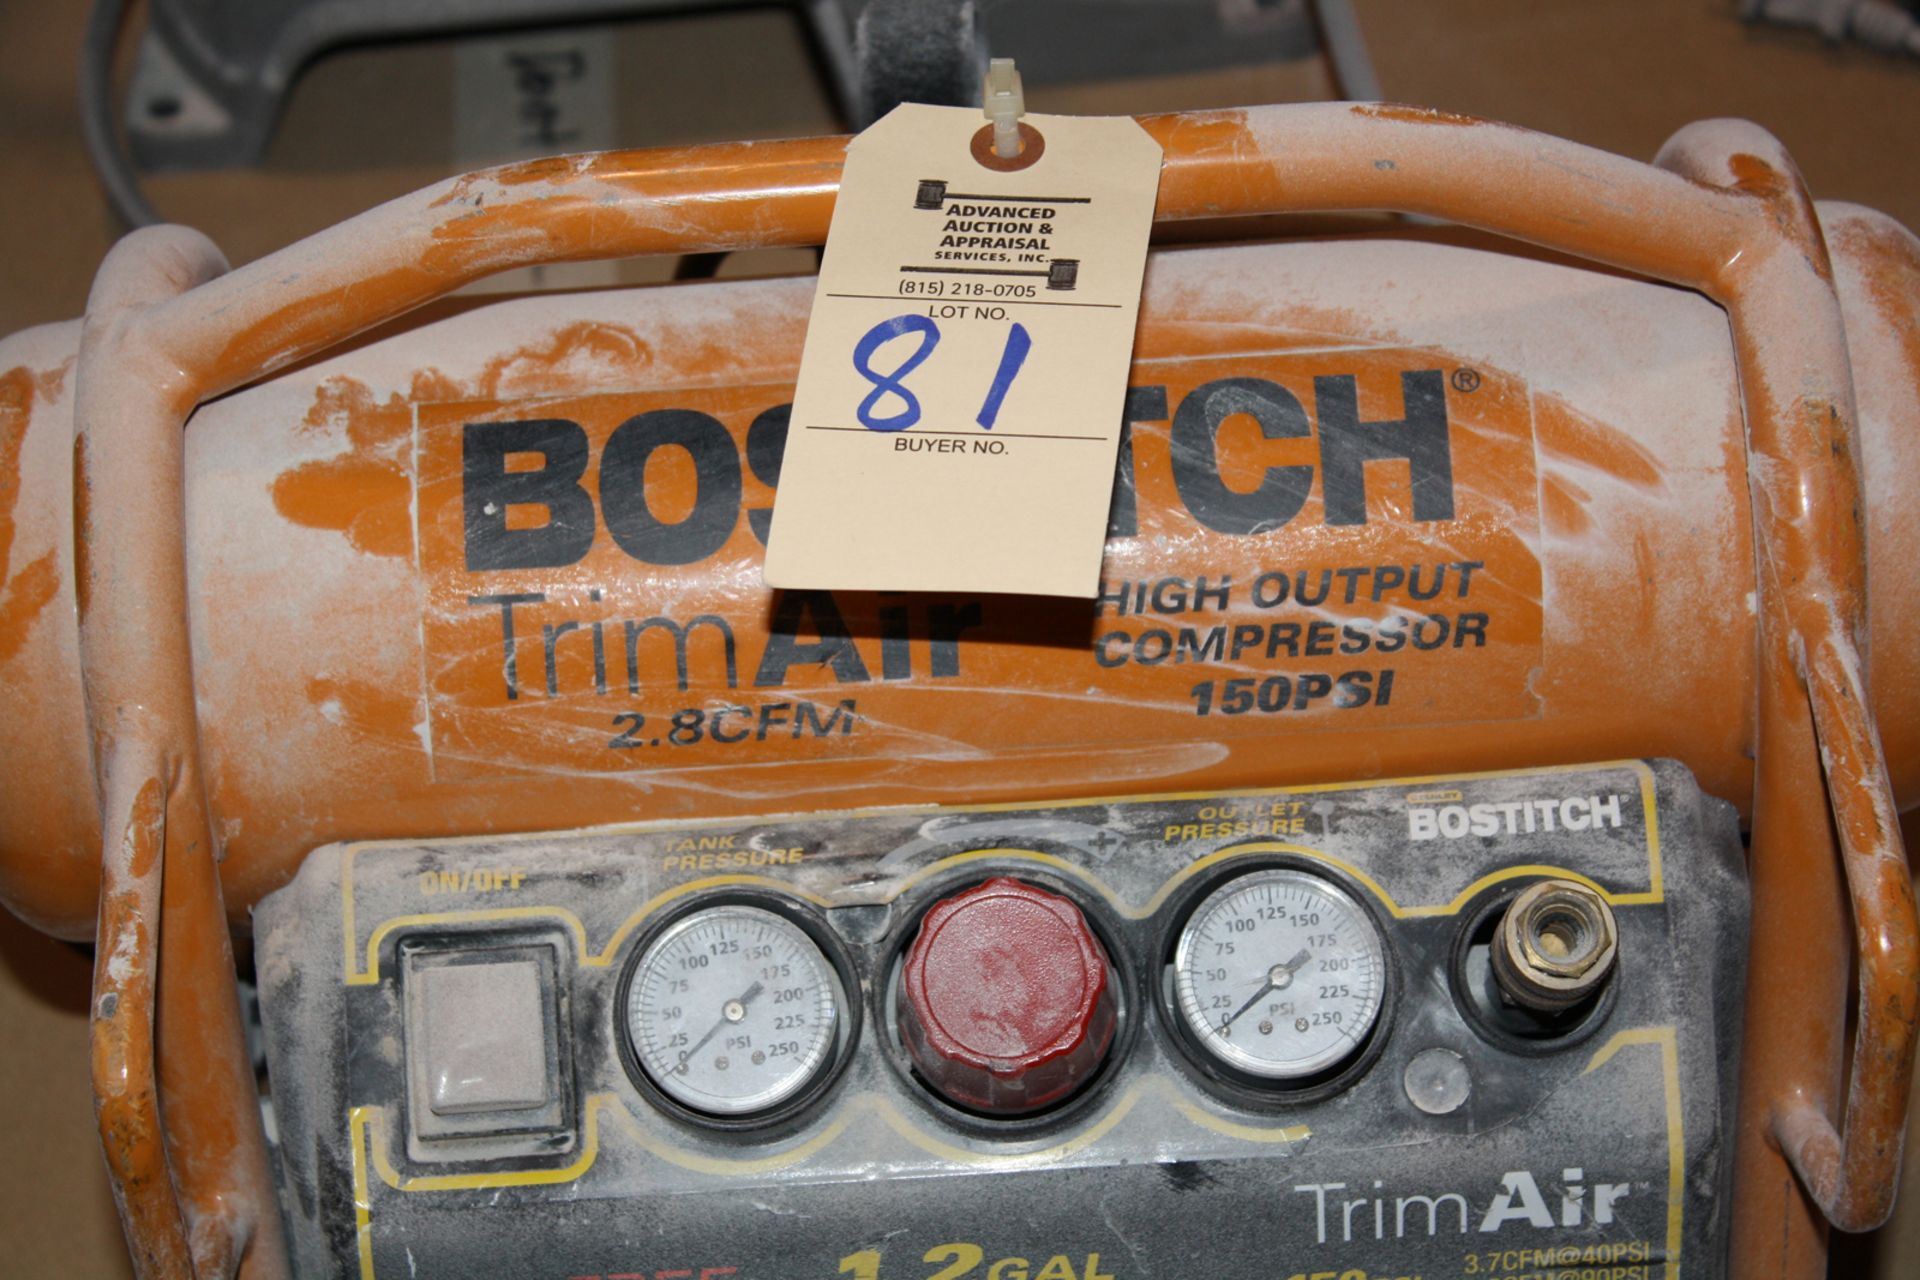 Bostich Trim Air 2.8CFM High Output Compressor 150PSI CAP1512-OF - Image 3 of 4